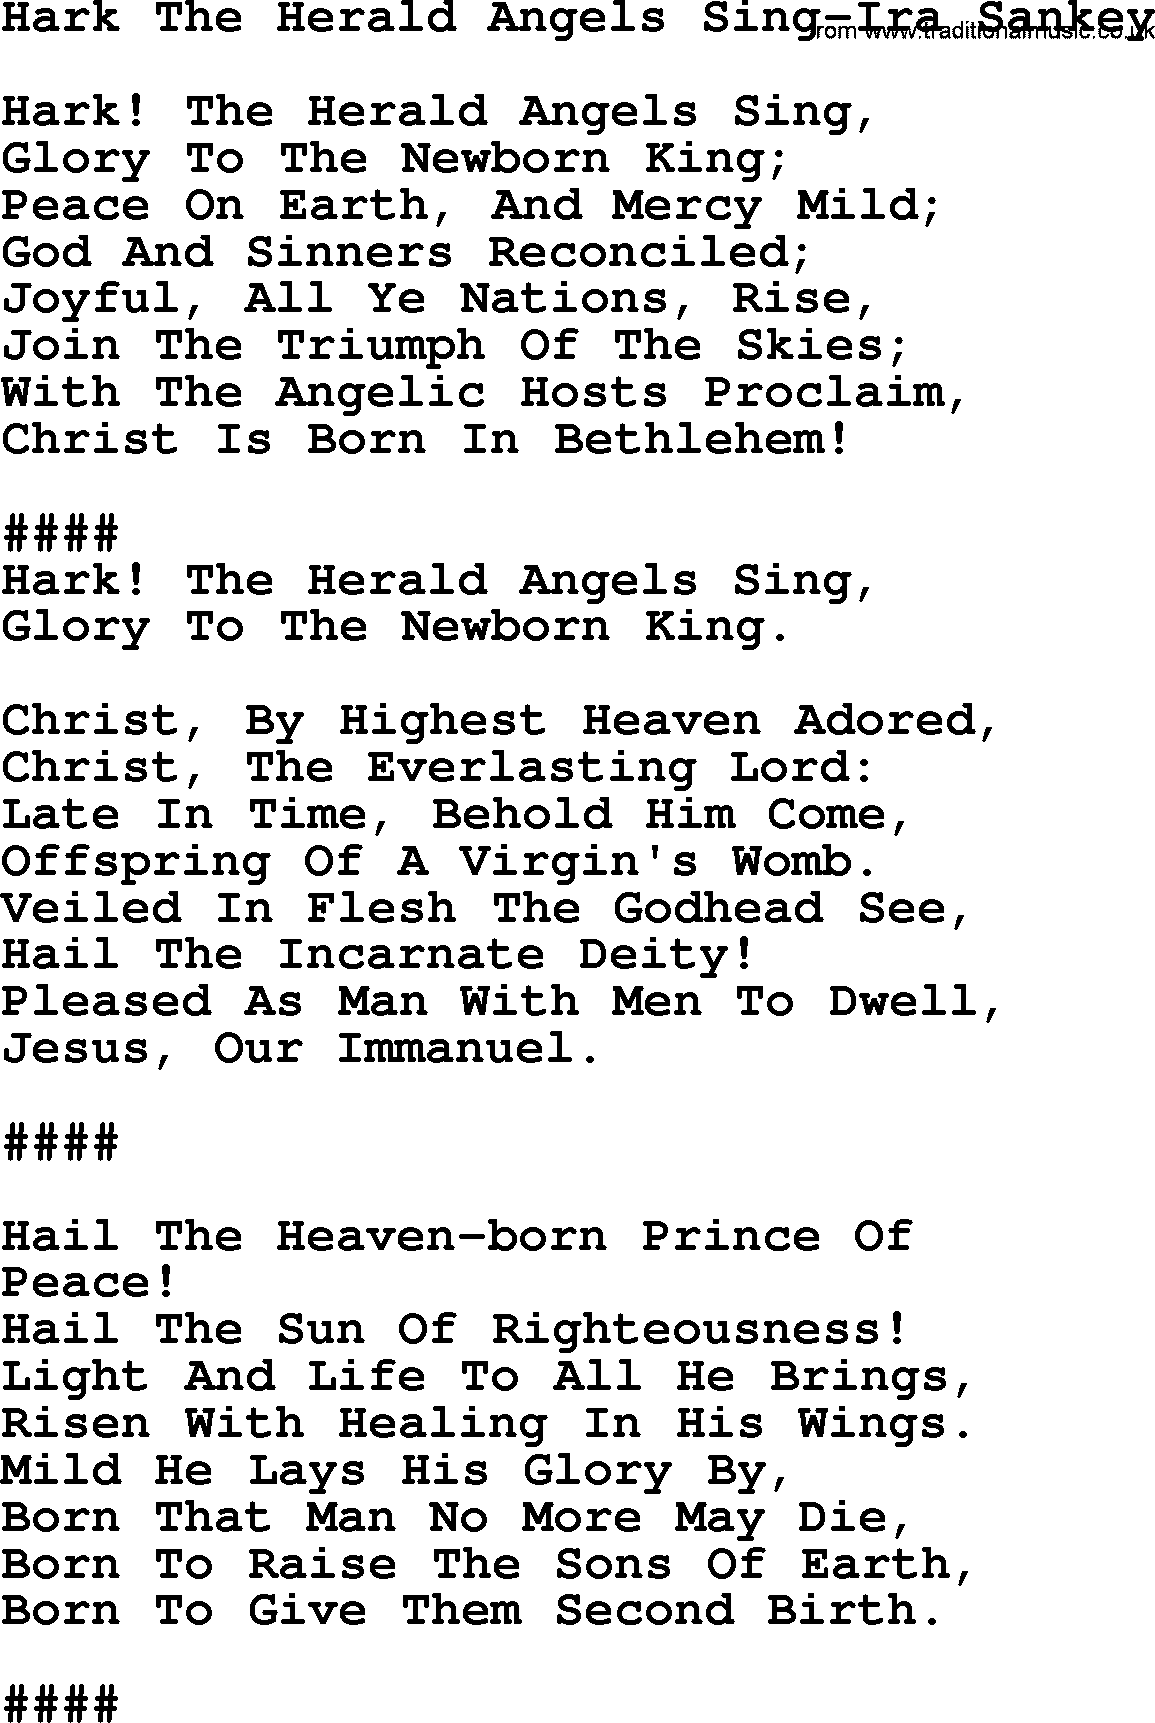 Ira Sankey hymn: Hark The Herald Angels Sing-Ira Sankey, lyrics